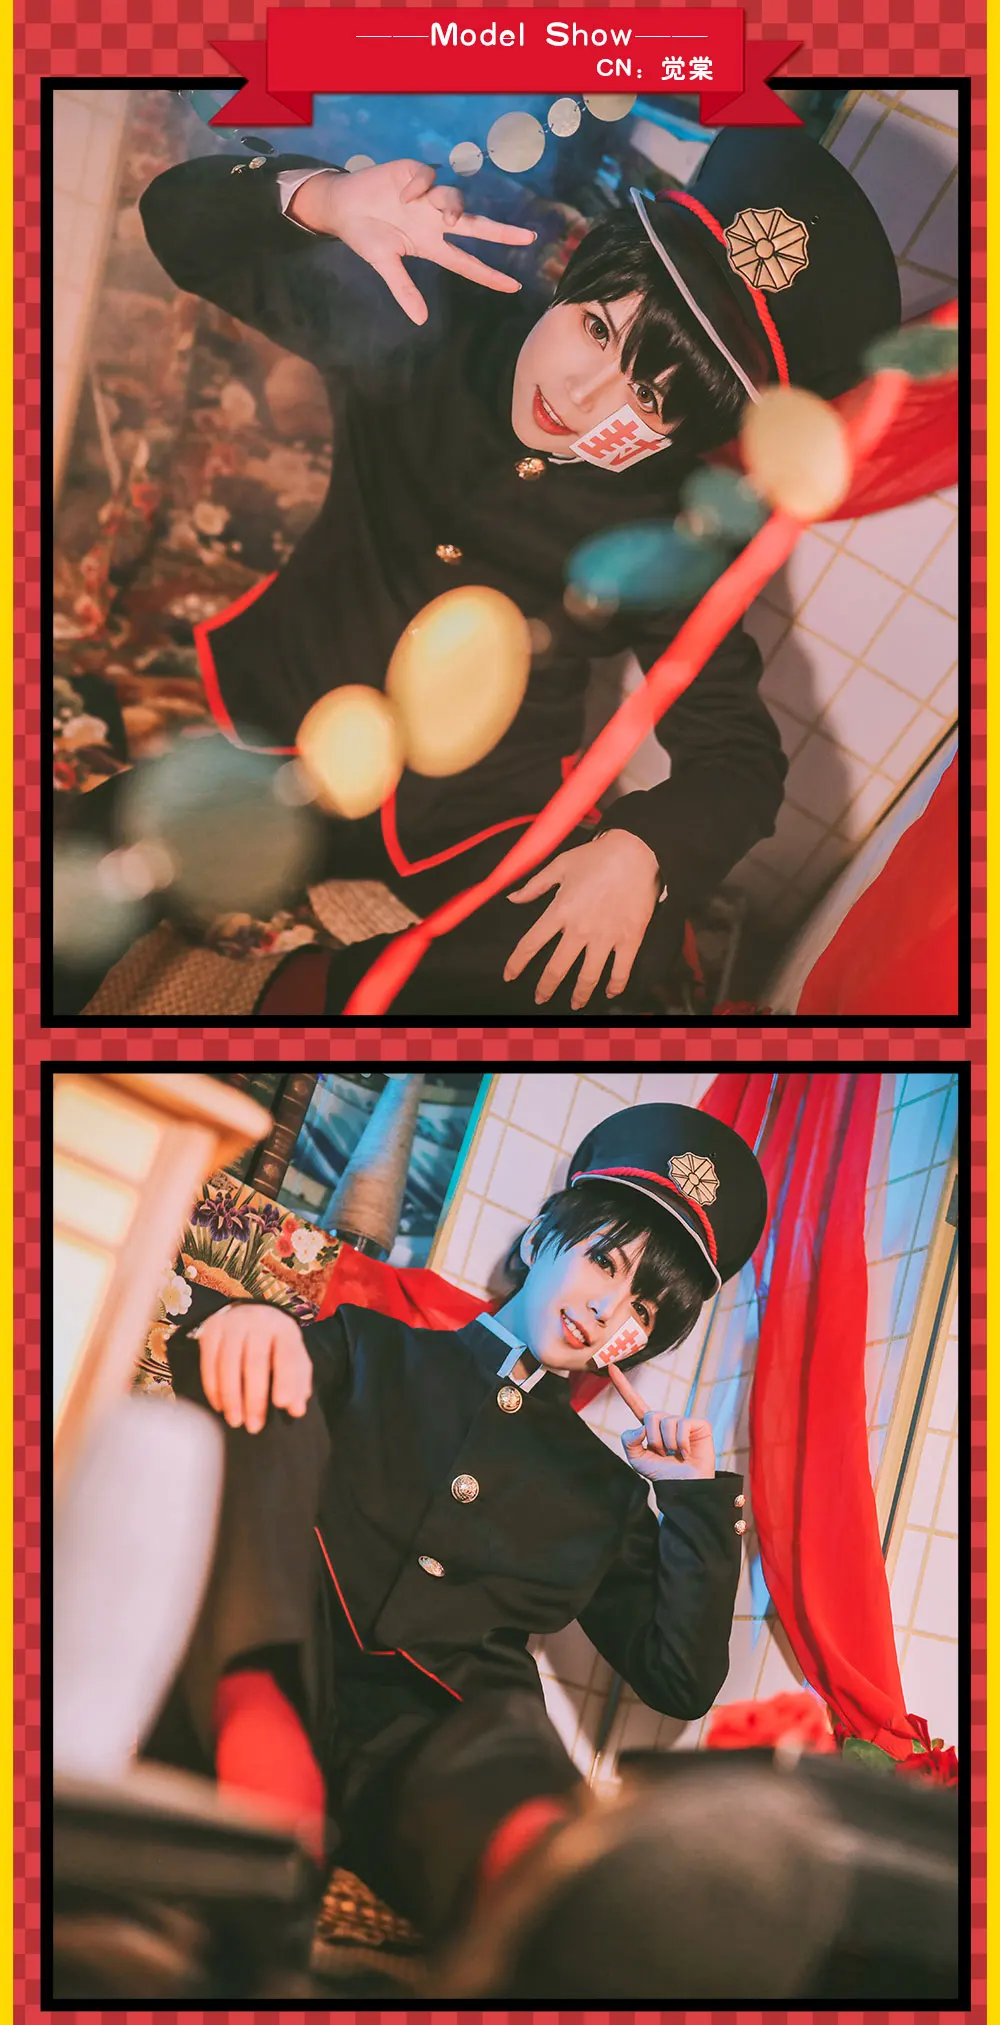 UWOWO Anime Cosplay Costume Toilet-Bound Hanako-kun/Jibaku Shounen Hanako-kun Uniform Cosplay Costume For Men